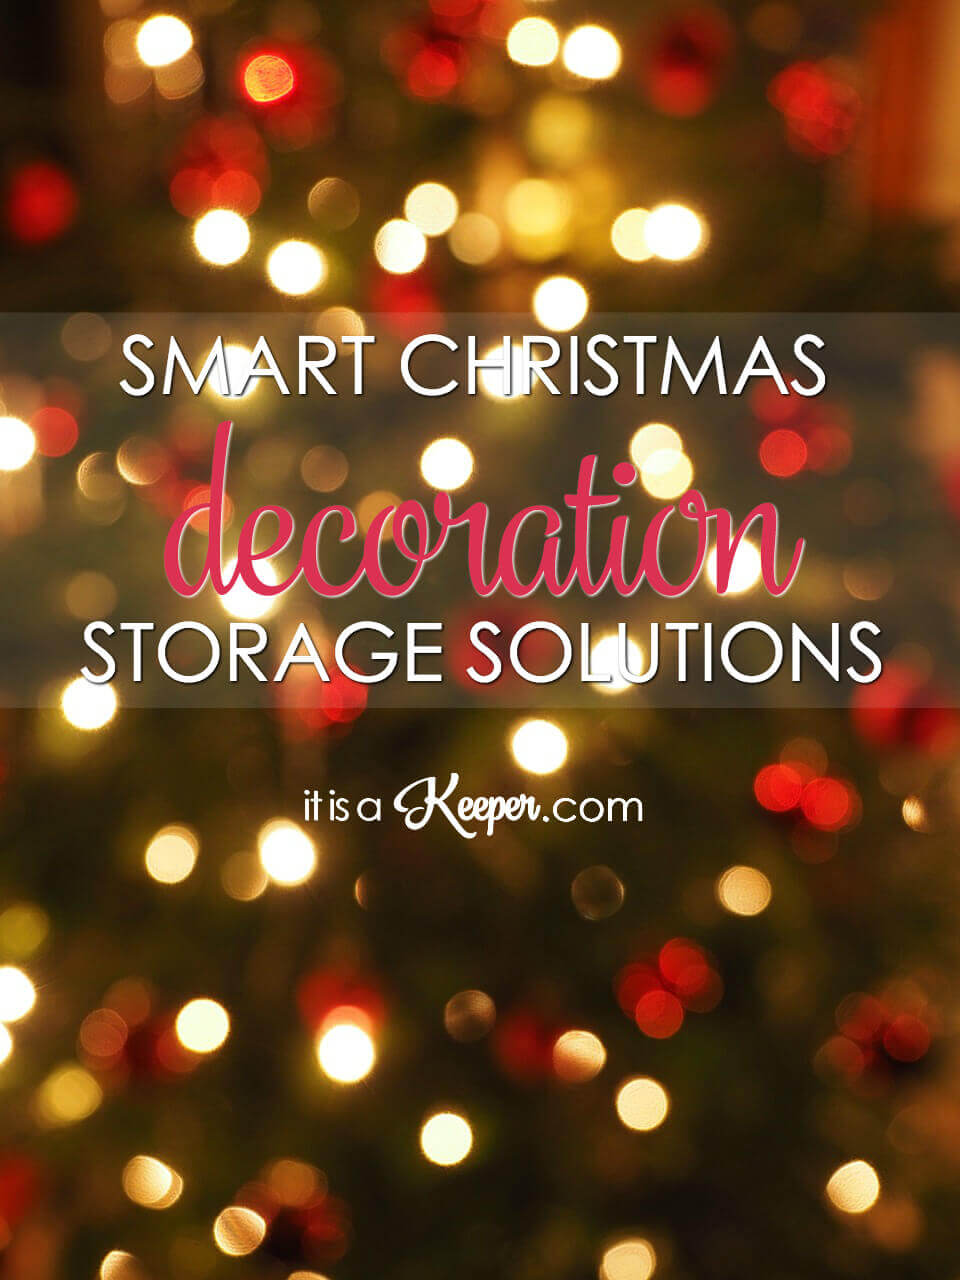 Smart Christmas decoration storage ideas